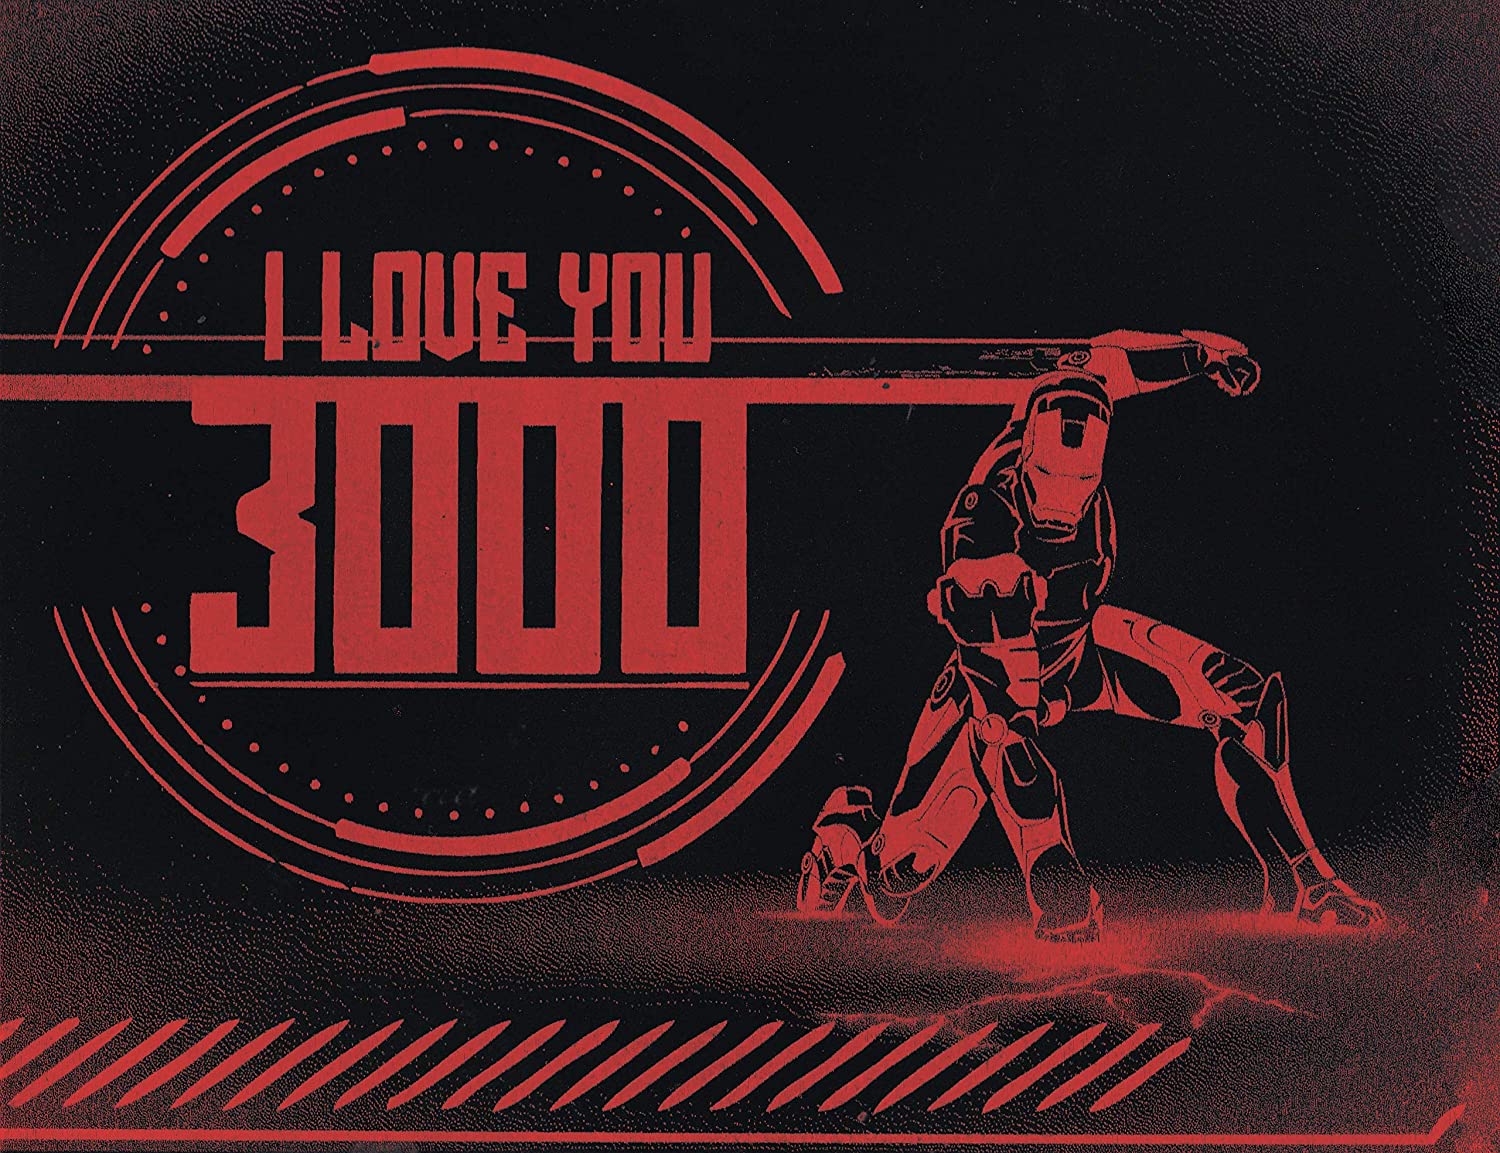 I Love You 3000 Iron Man Poster: Handmade